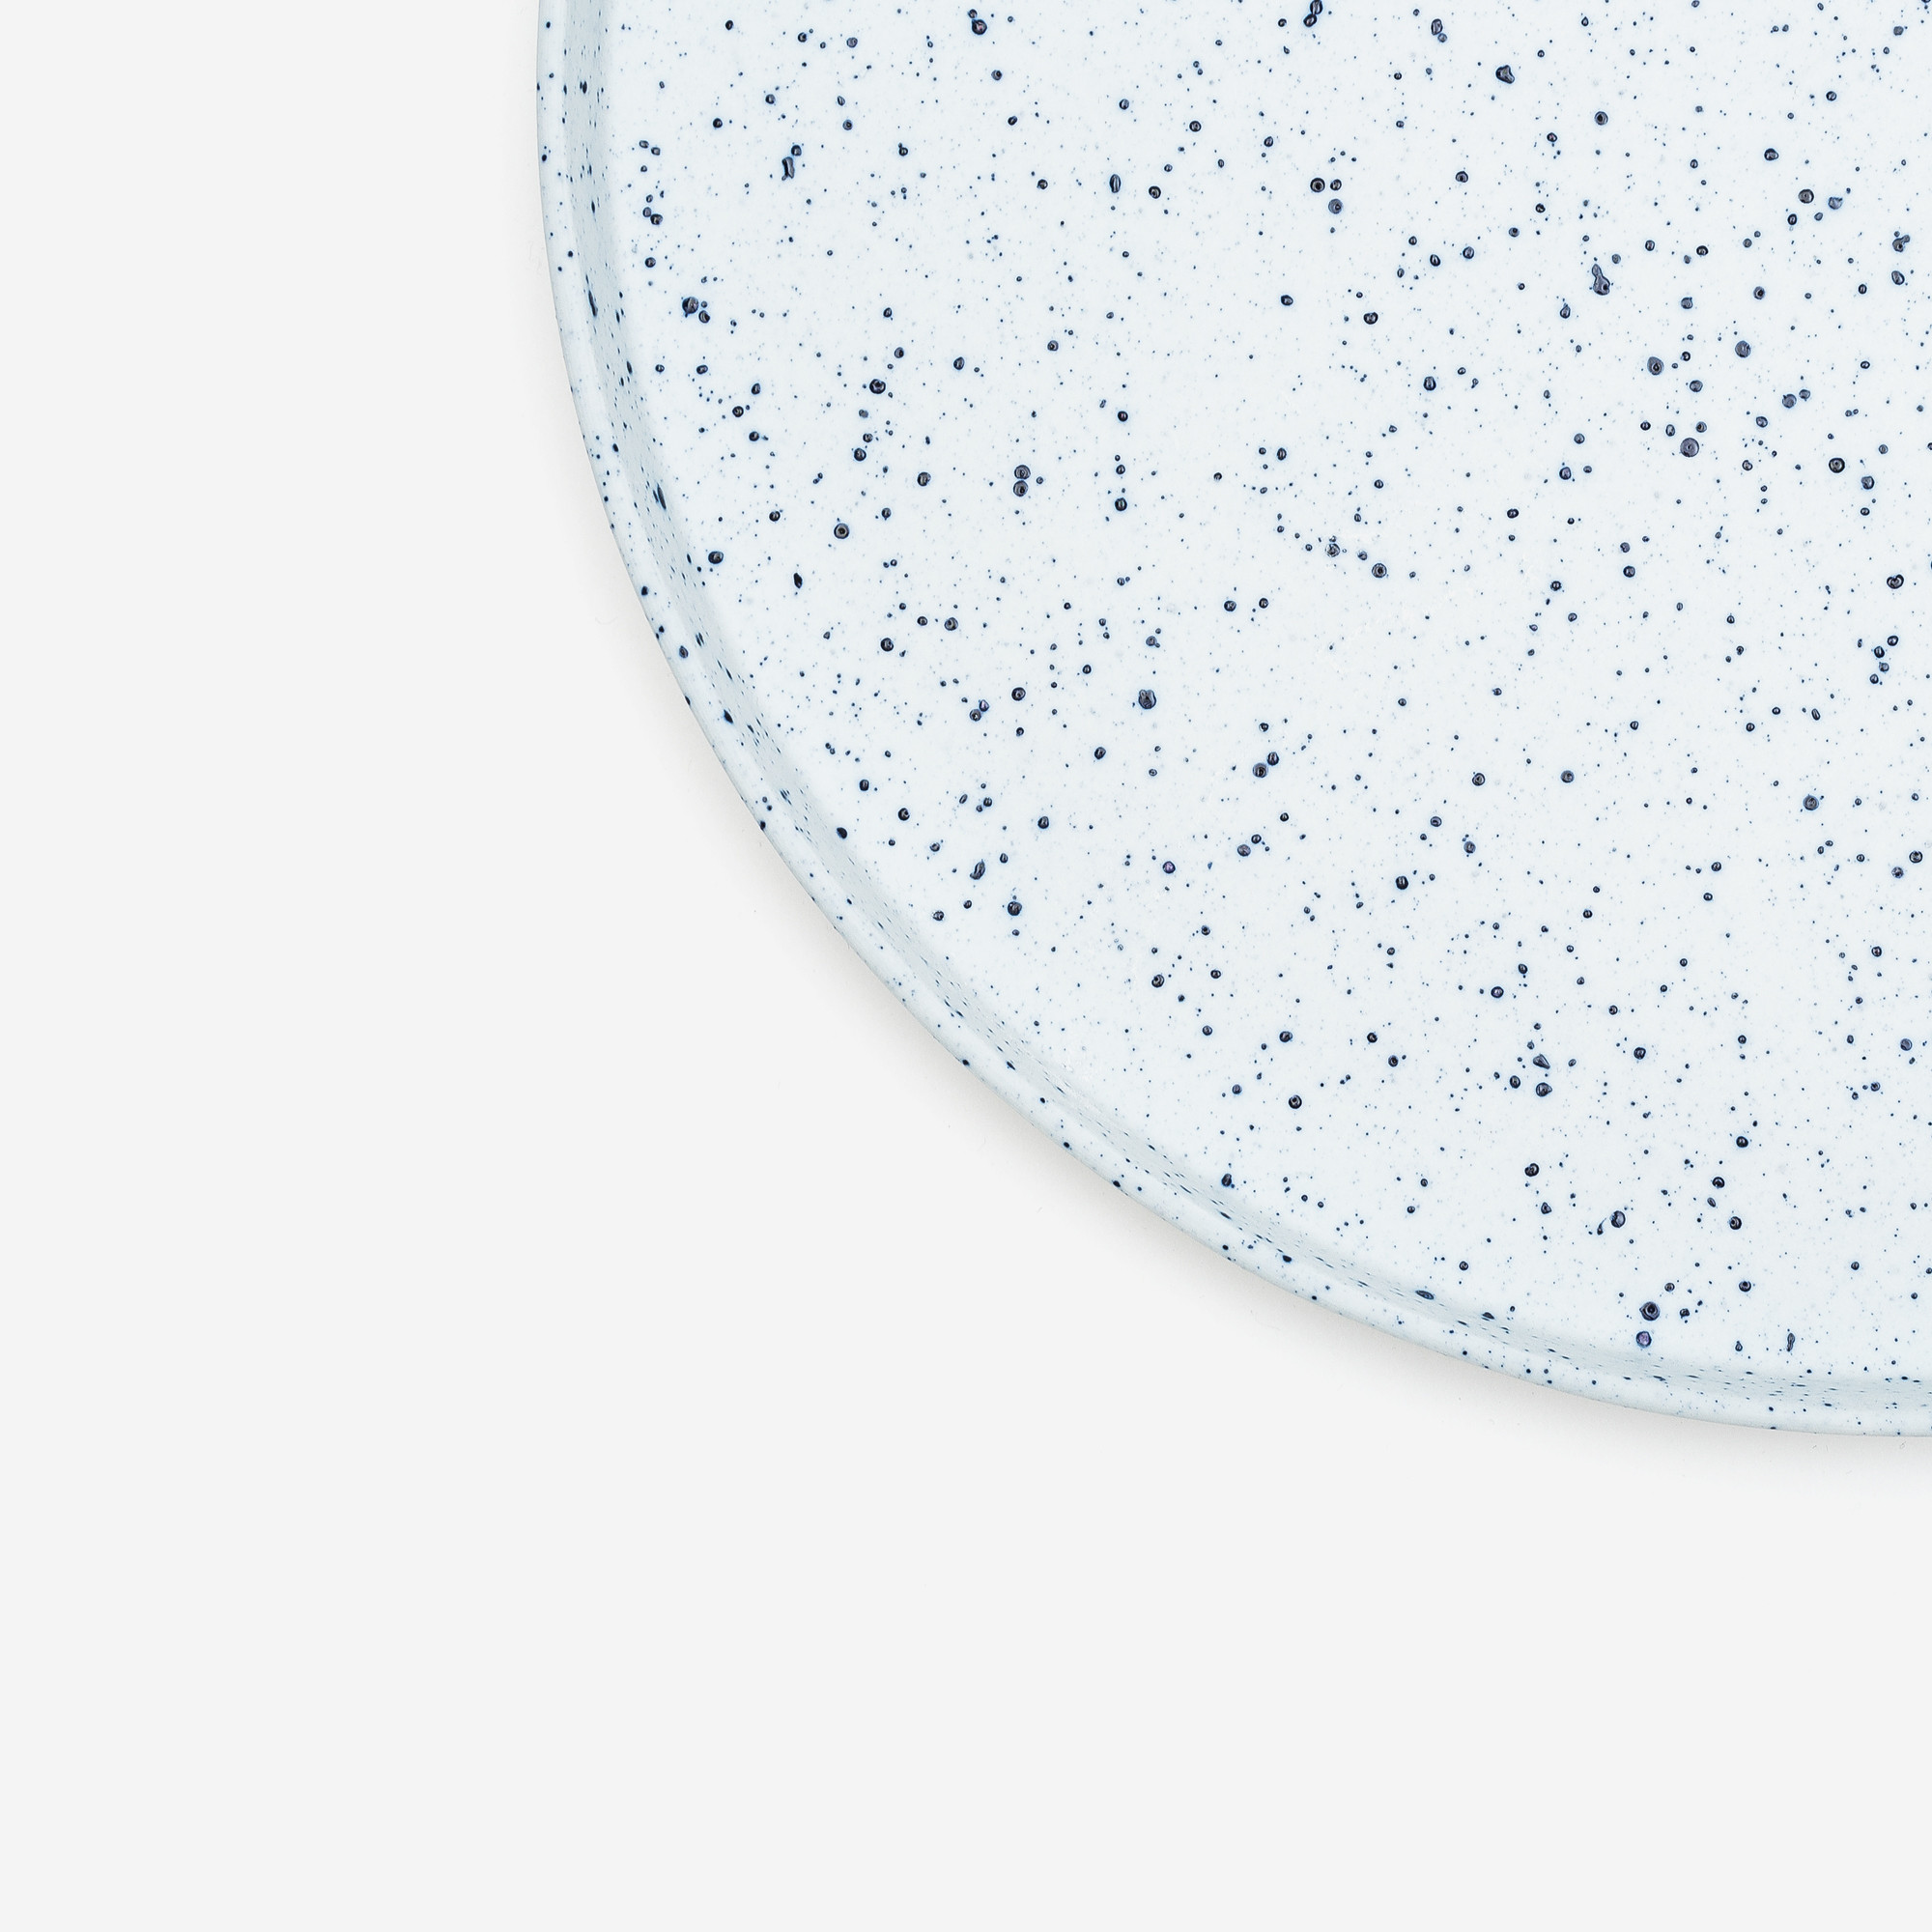 De Intuitiefabriek | Modern ceramic plate with sprinkles